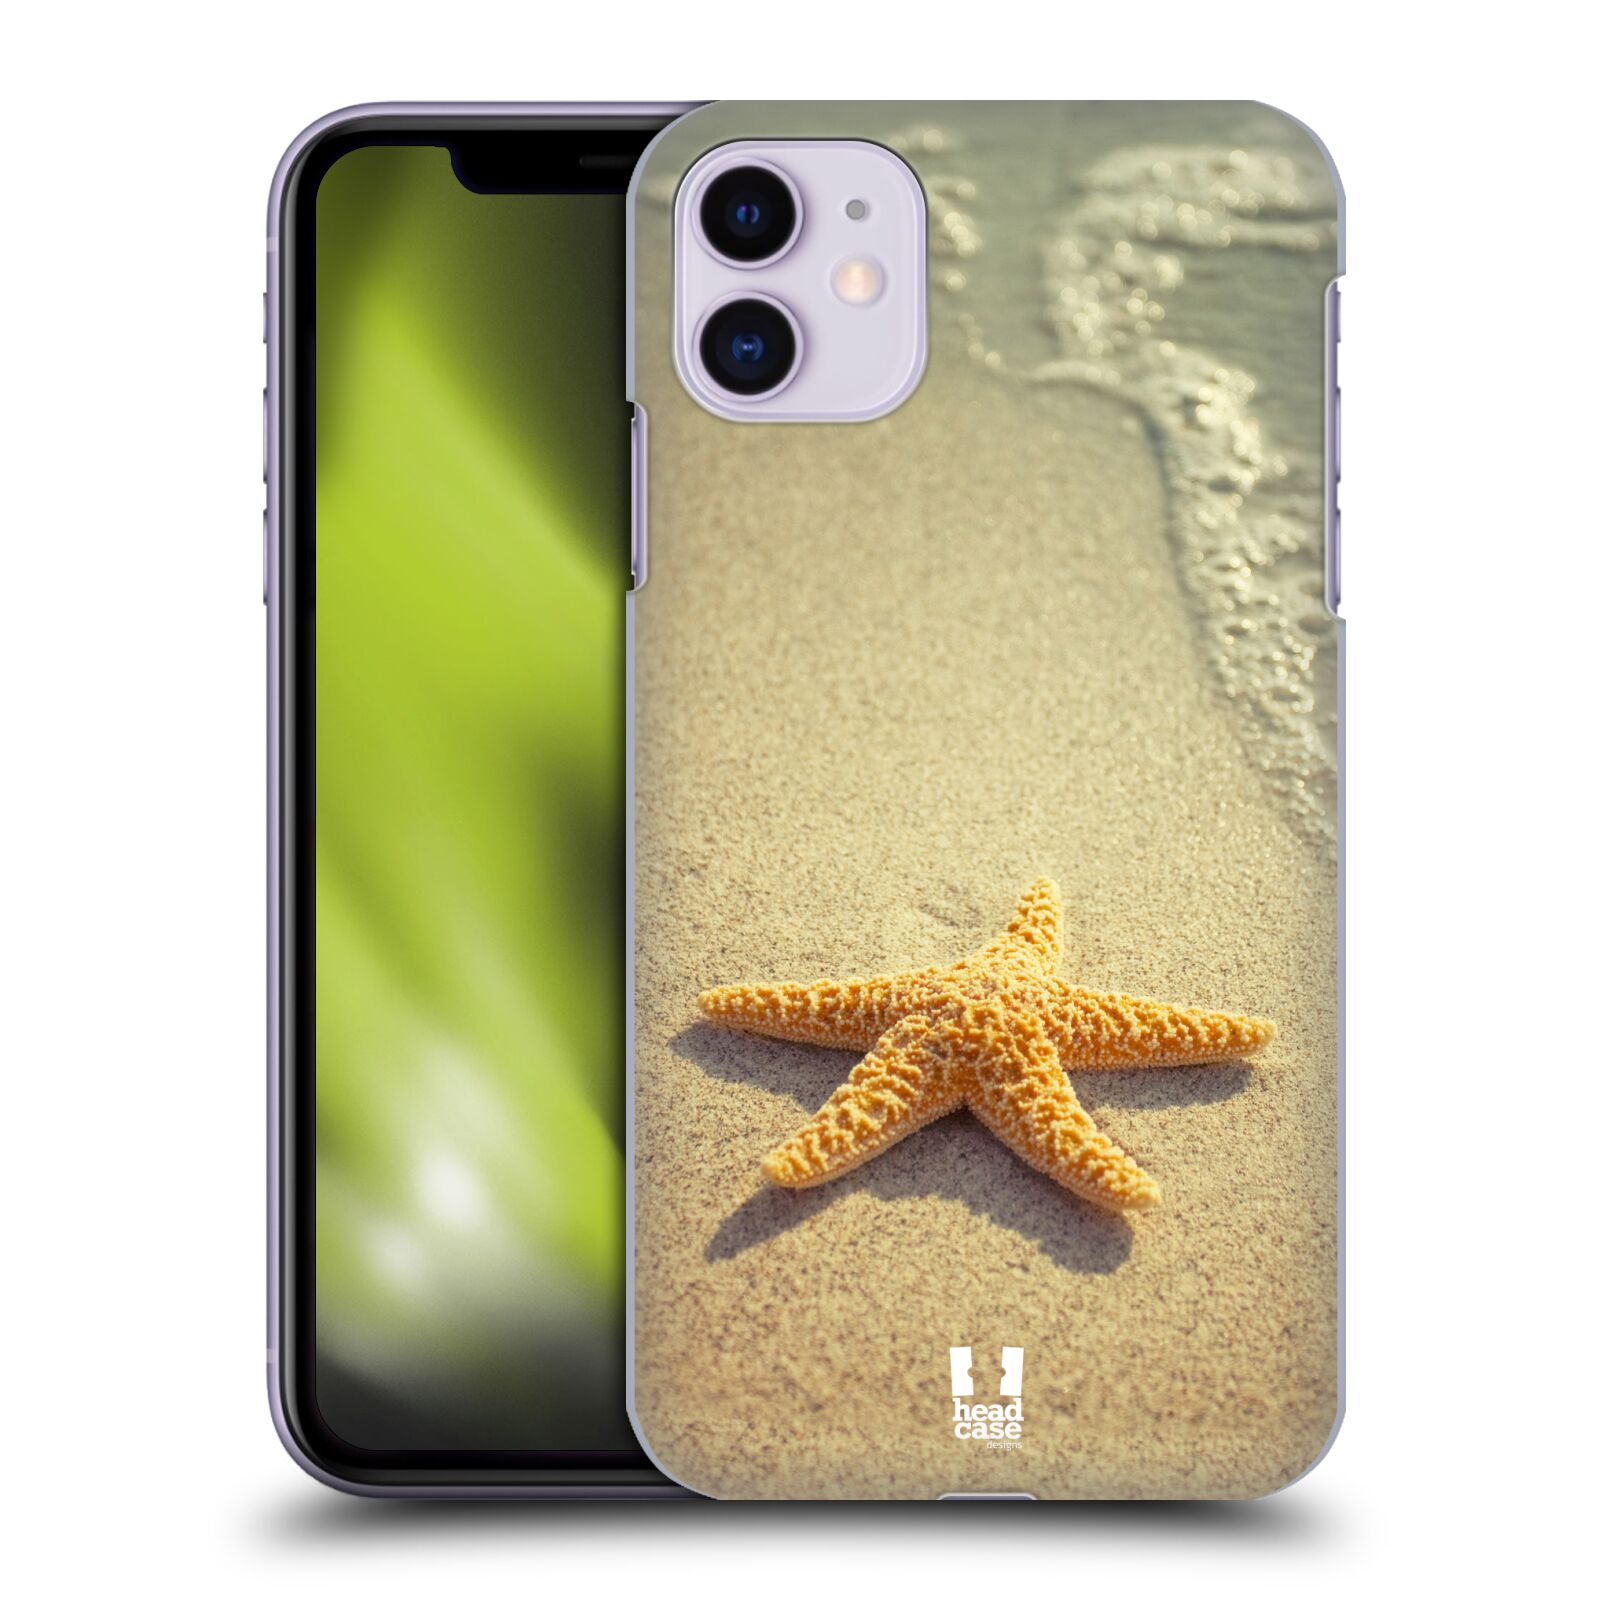 Pouzdro na mobil Apple Iphone 11 - HEAD CASE - vzor slavná zvířata foto hvězda na břehu